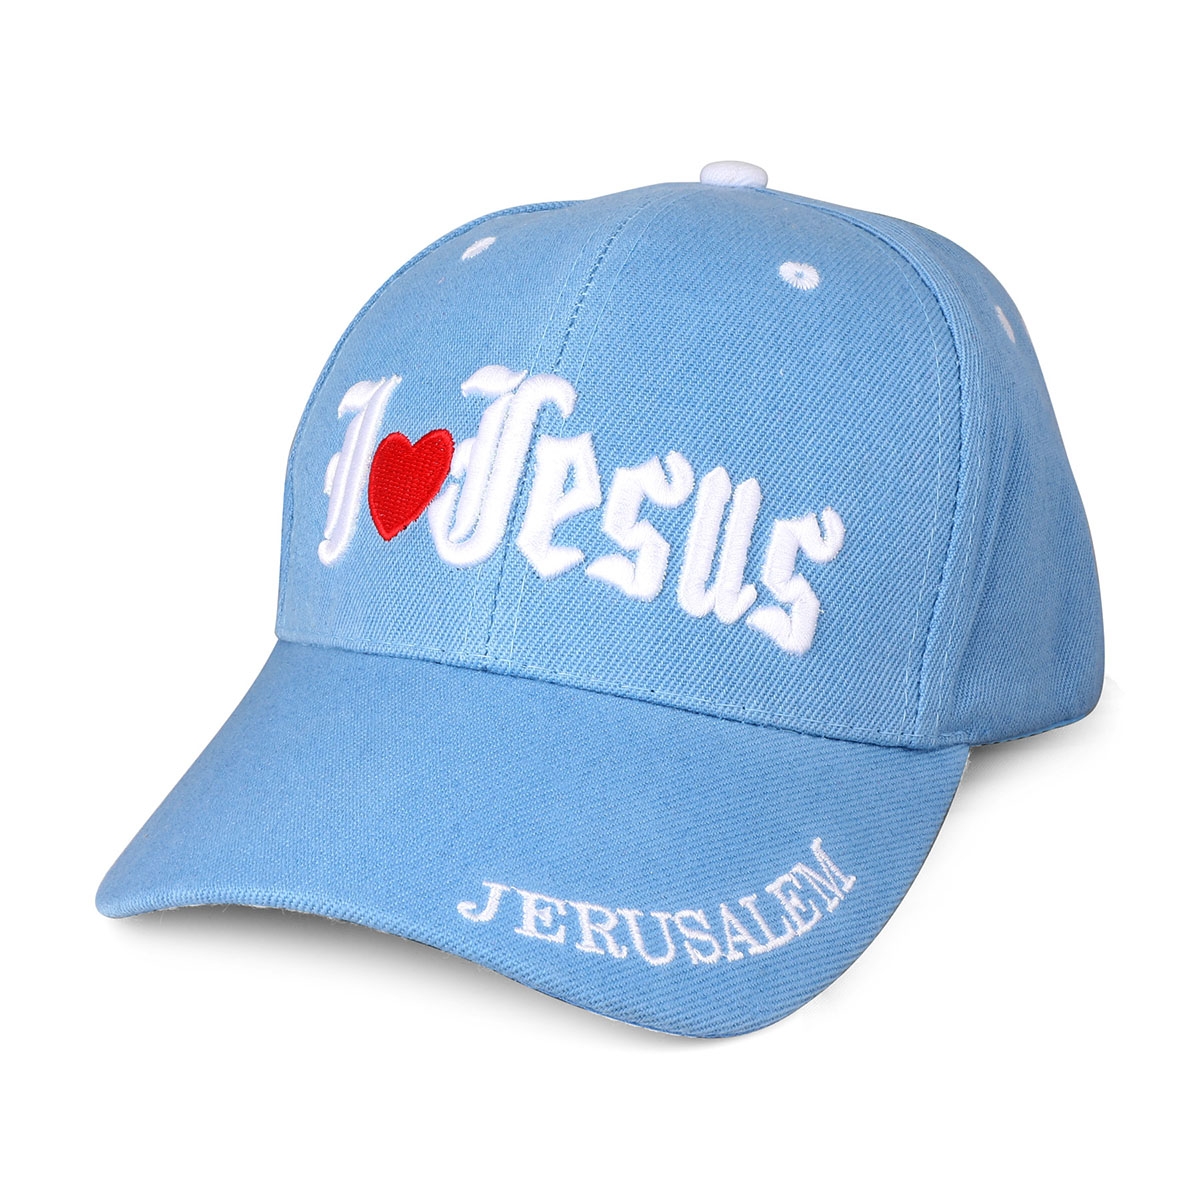 I Love Jesus Baseball Cap – Blue - 1